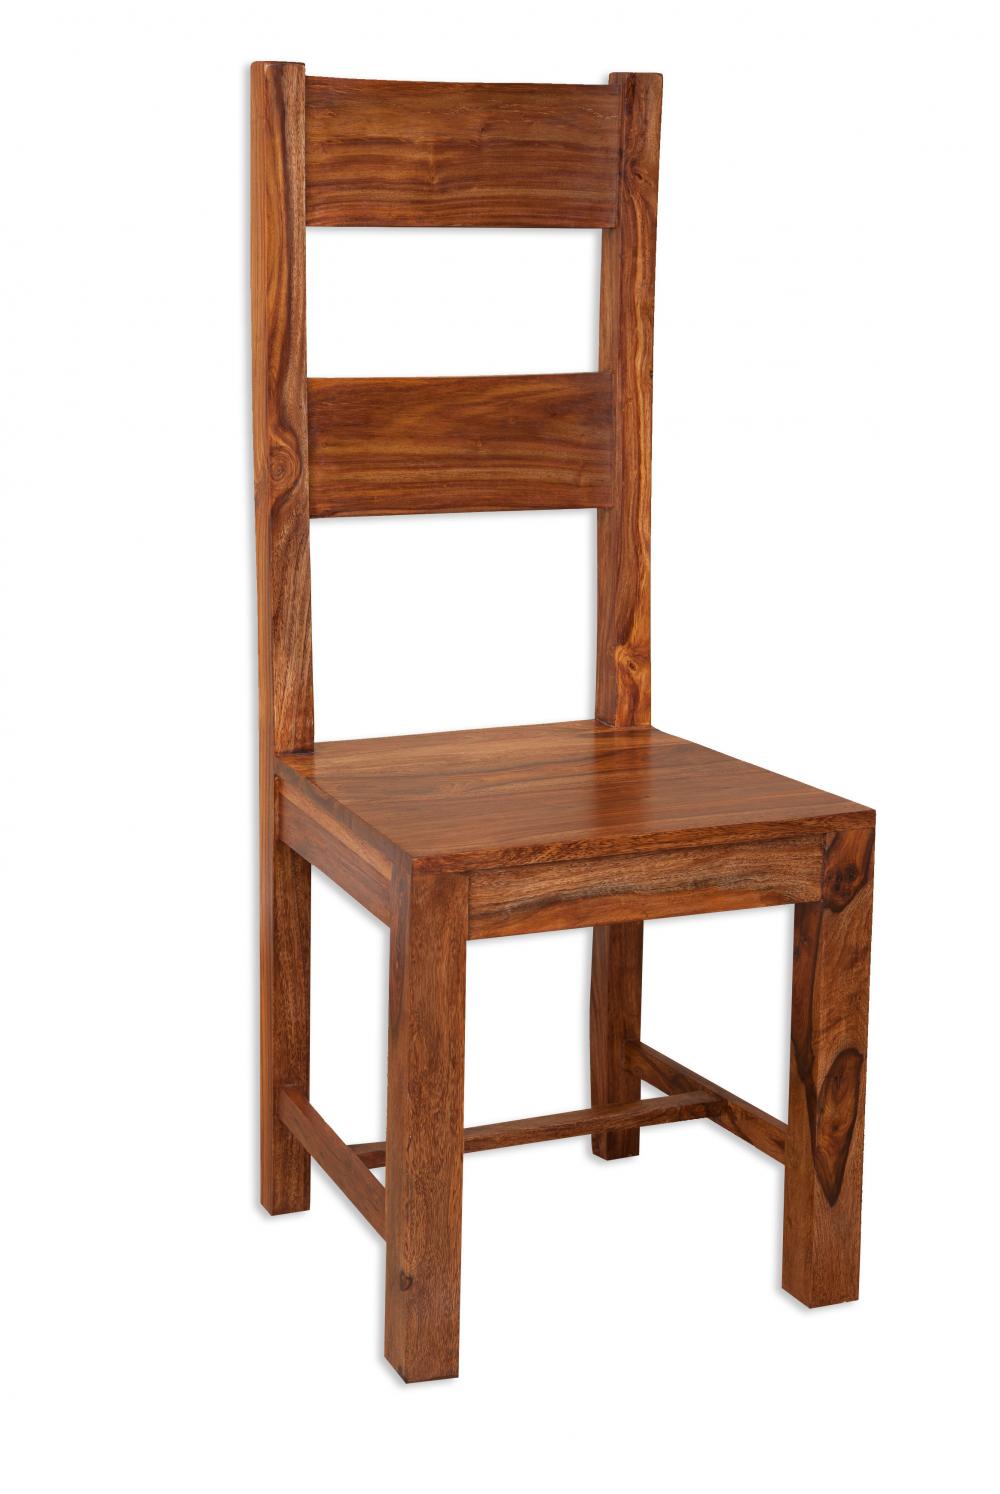 Rustic Sheesham Dining Chair £129